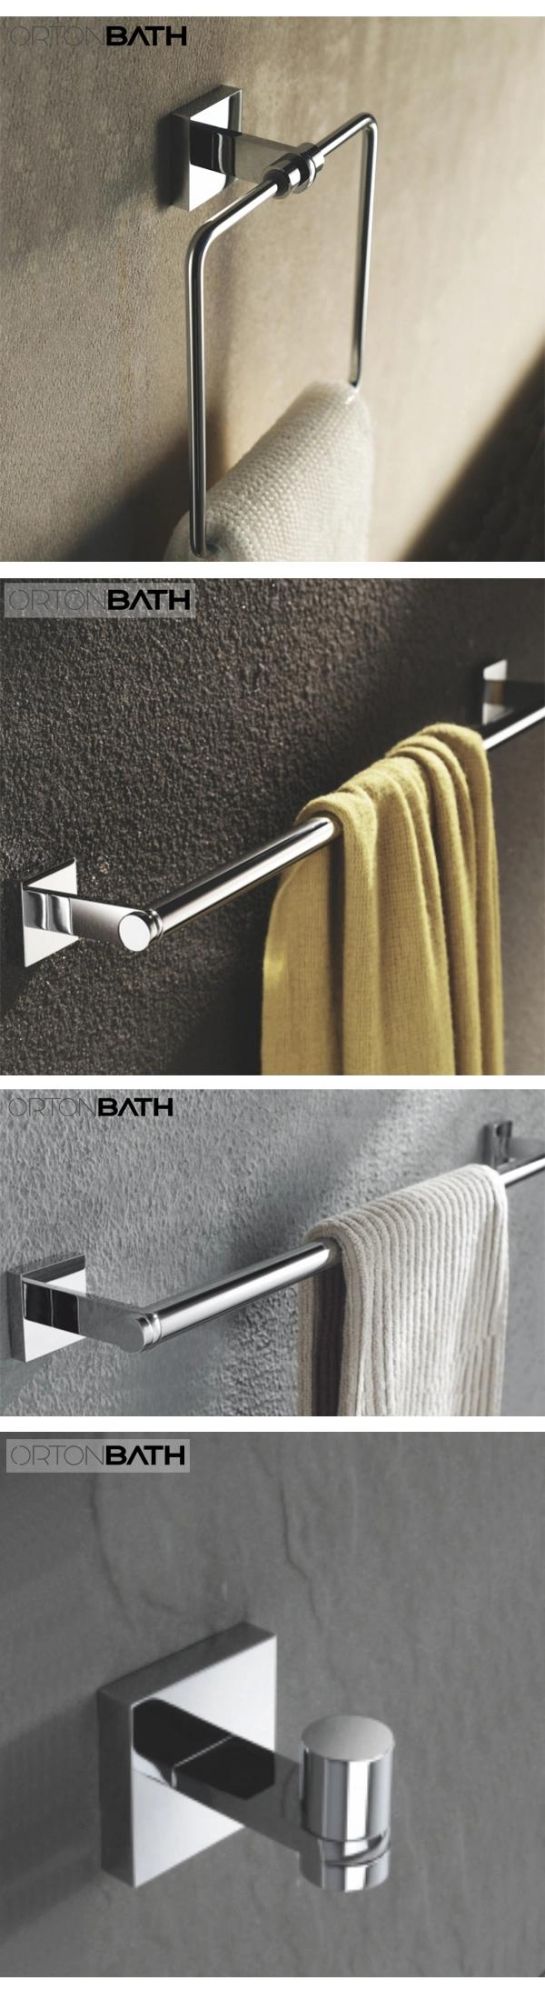 Ortonbath Bathroom Hardware Polished Chrome Brass Include Towel Bar Towel Holder Toilet Paper Holder Towel Hook, 5 Pieces Stainless Steel Bathroom Accessories